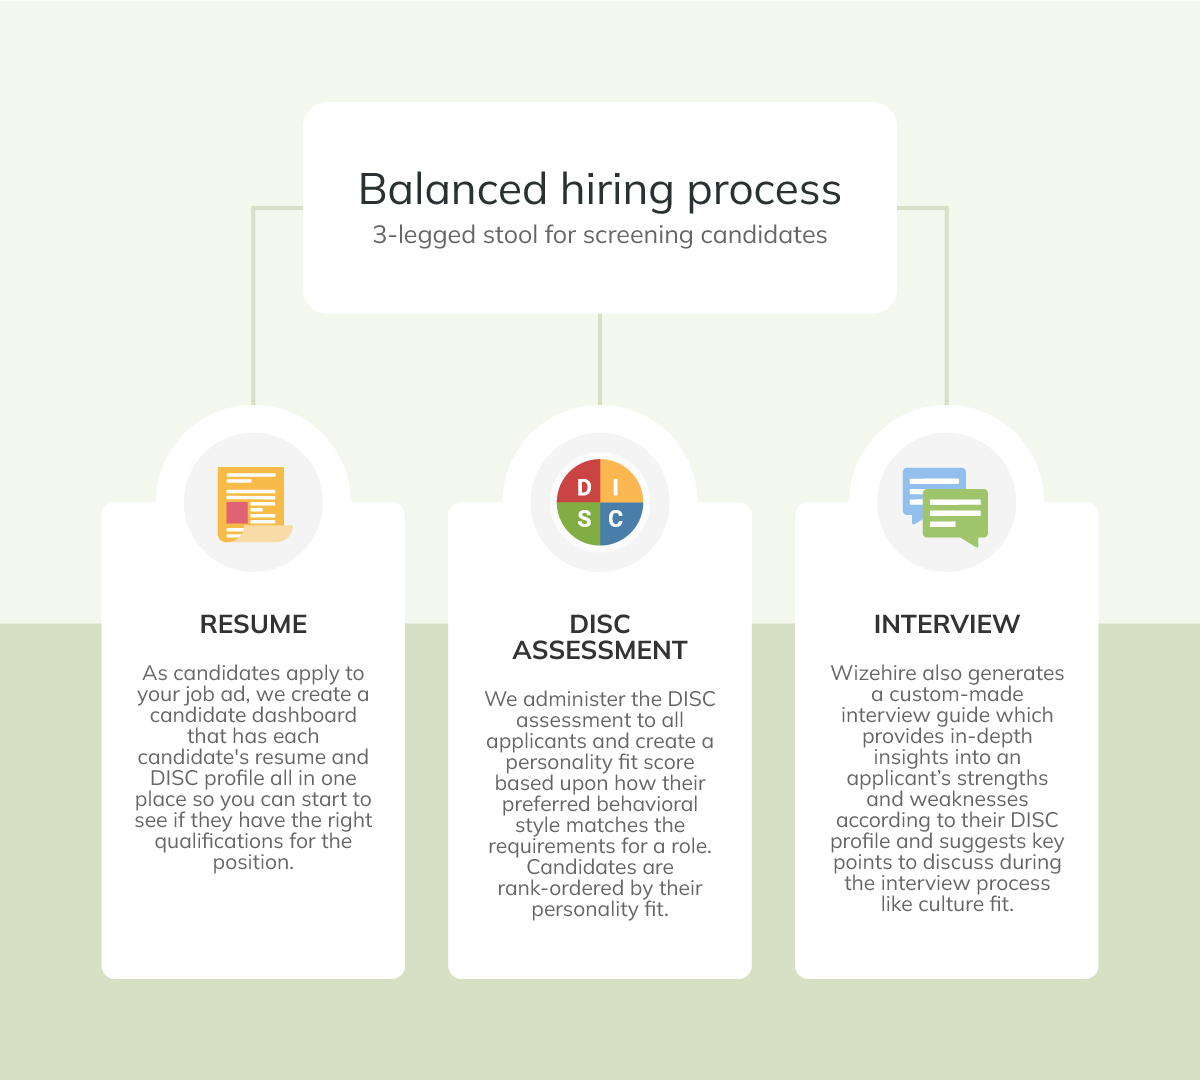 graphic that says "Balanced hiring process"